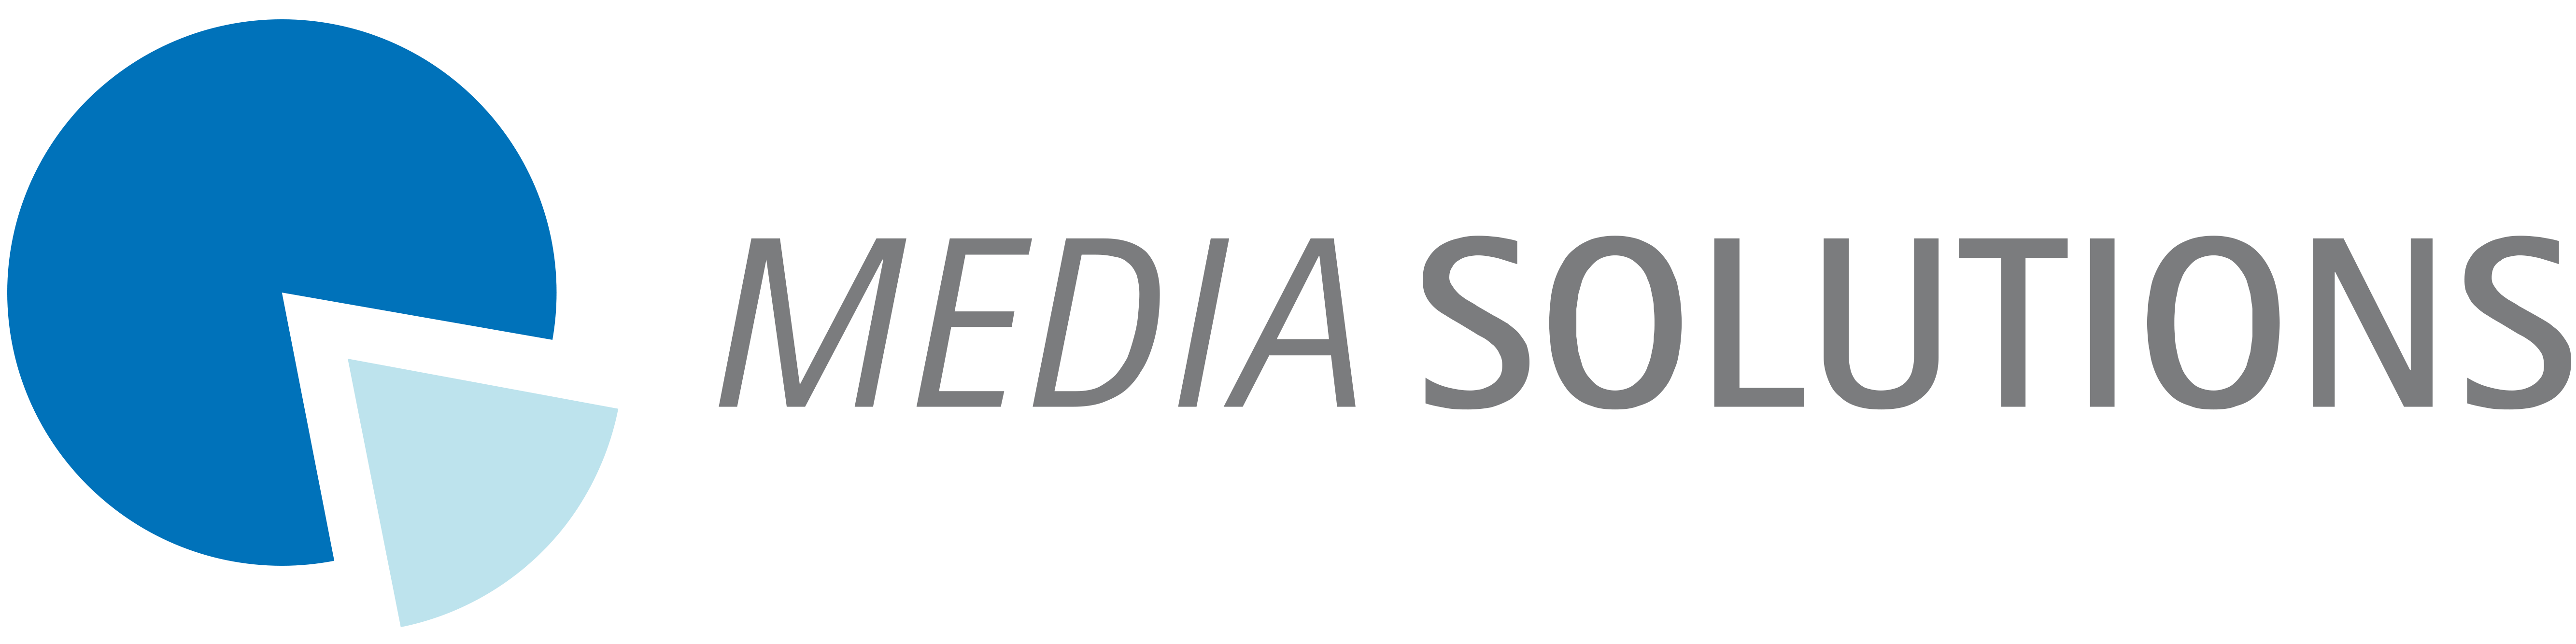 Media Solutions GmbH